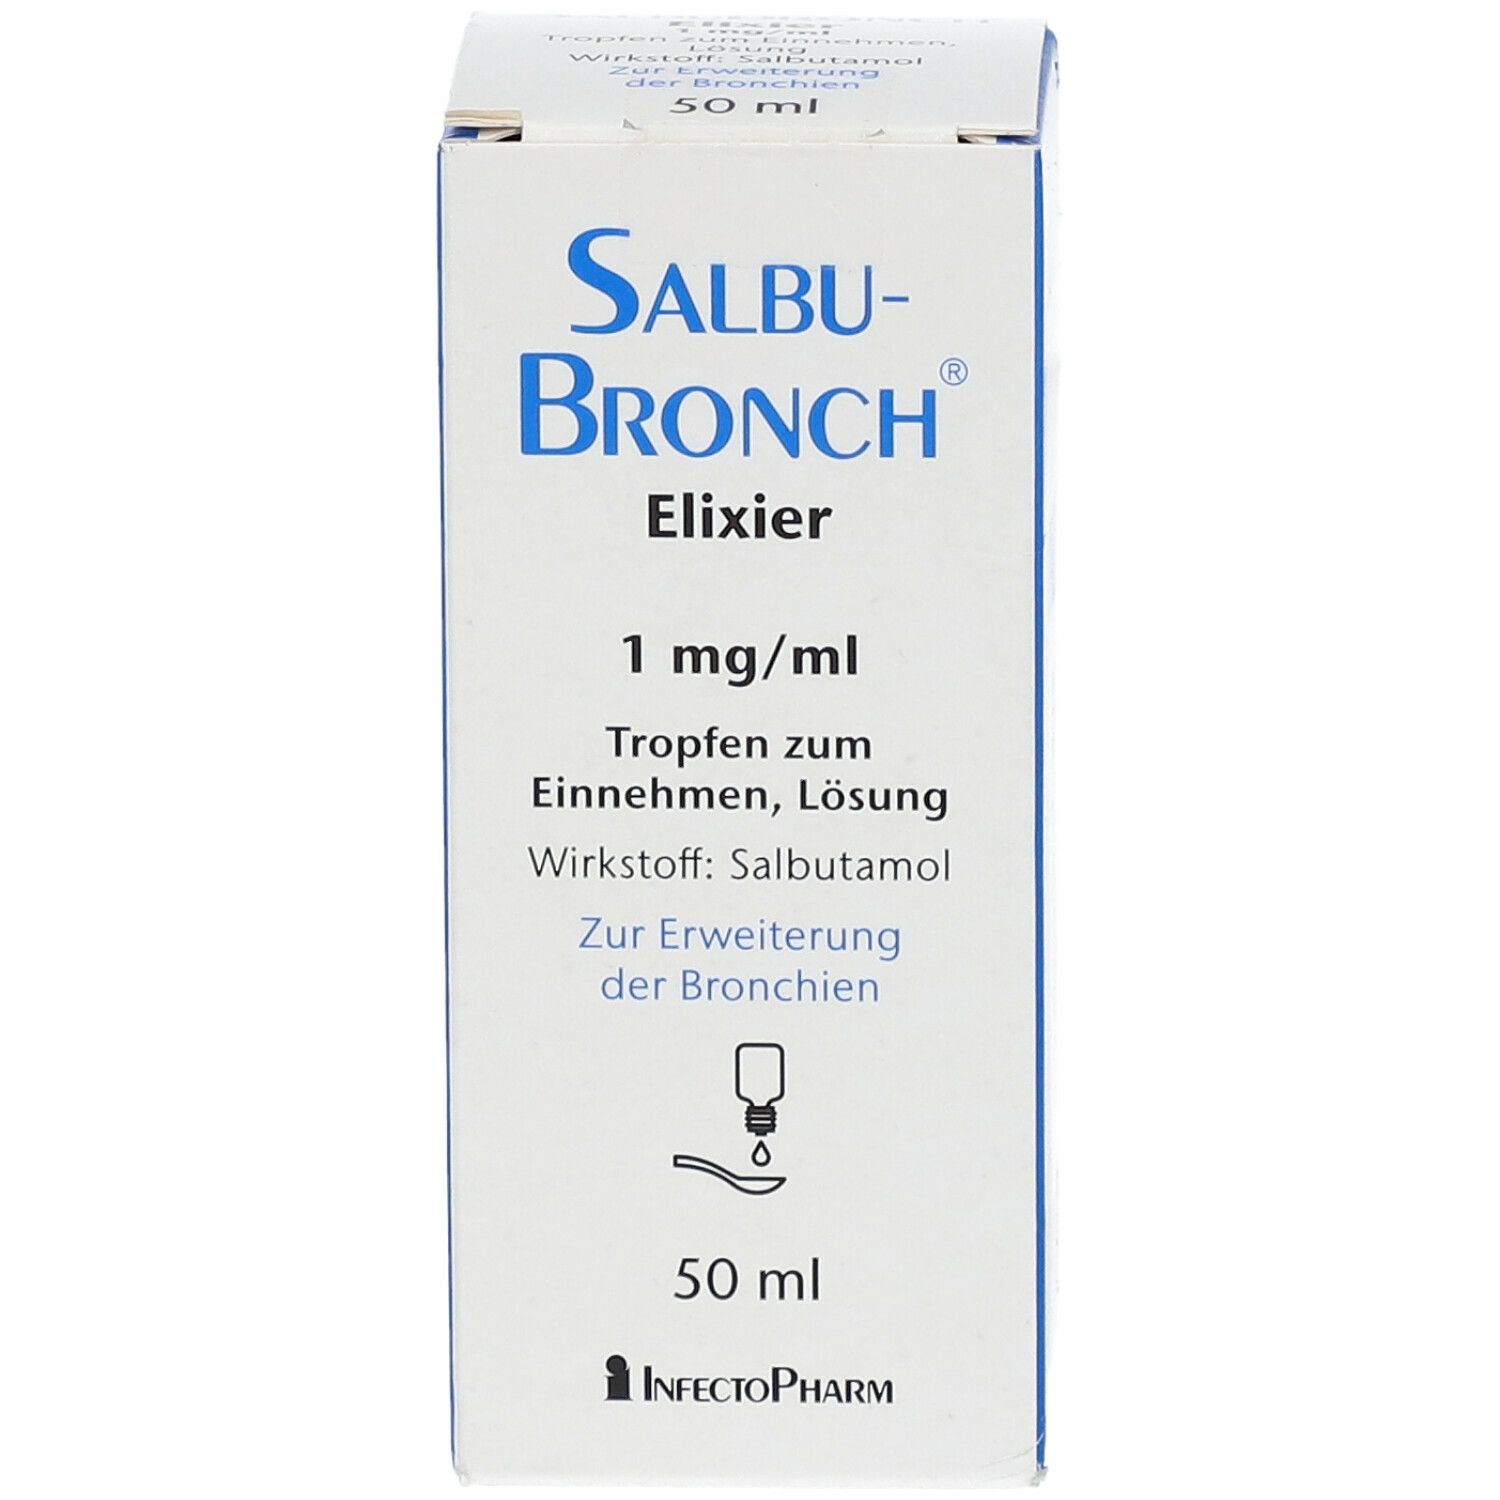 SalbuBronch® Elixier 1 mg/ml